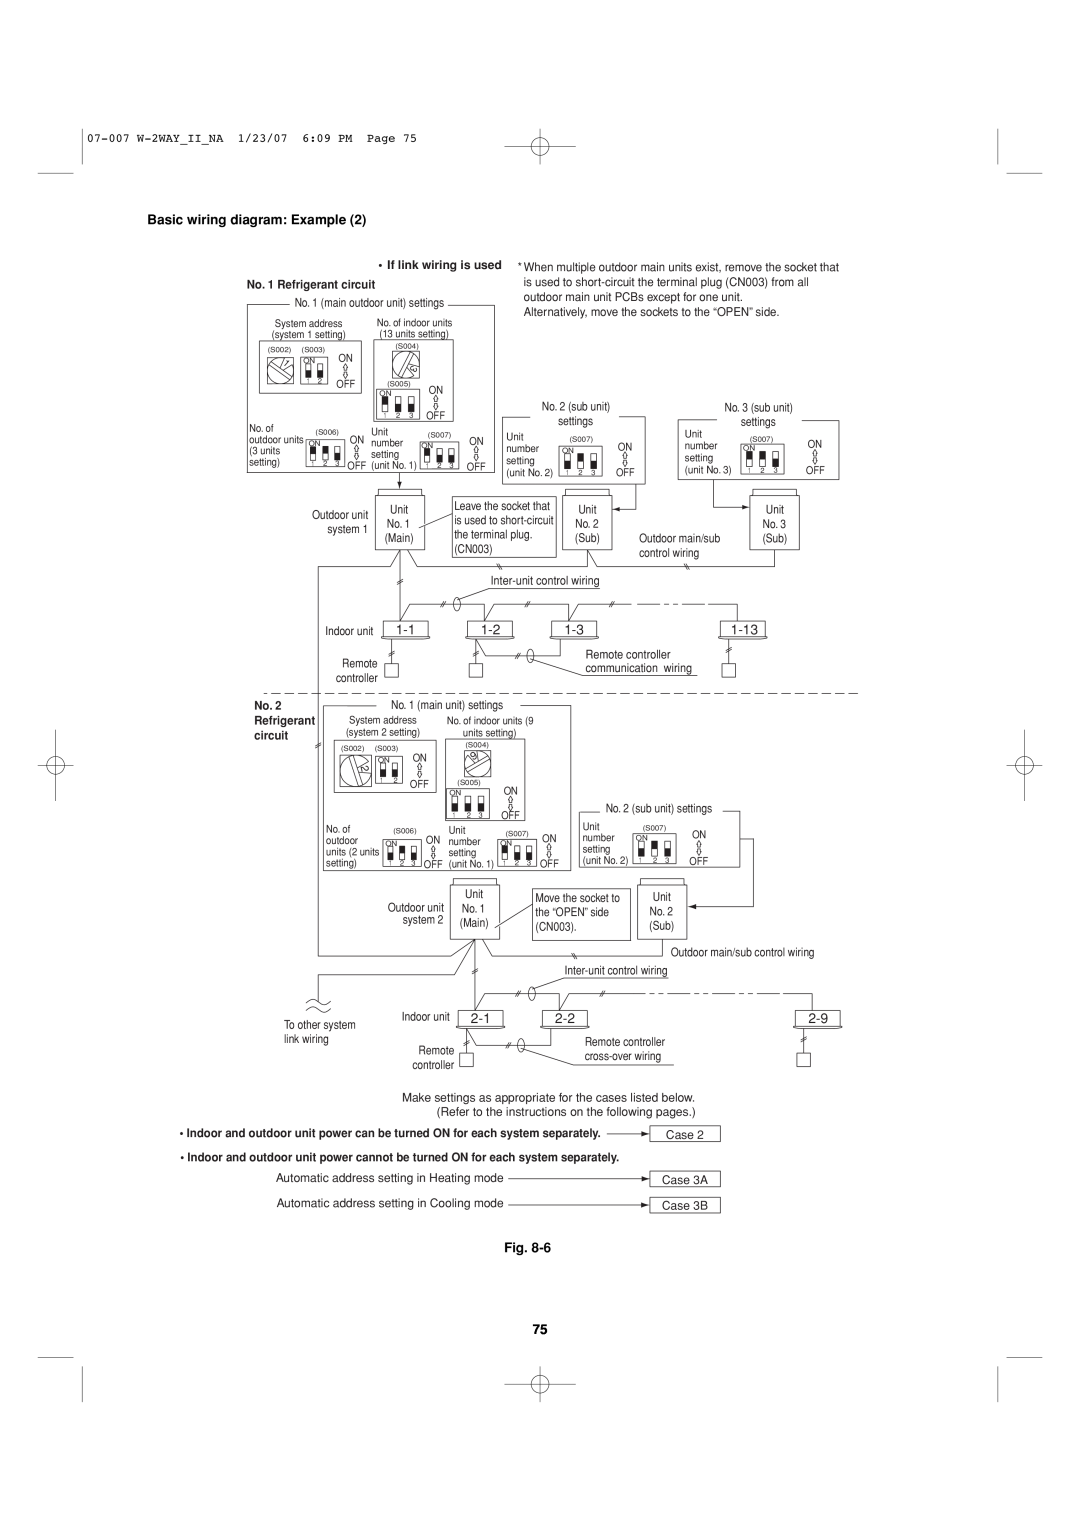 Sanyo 85464359982001 installation instructions Basic wiring diagram: Example, 1-13, 2-22-9, Fig 